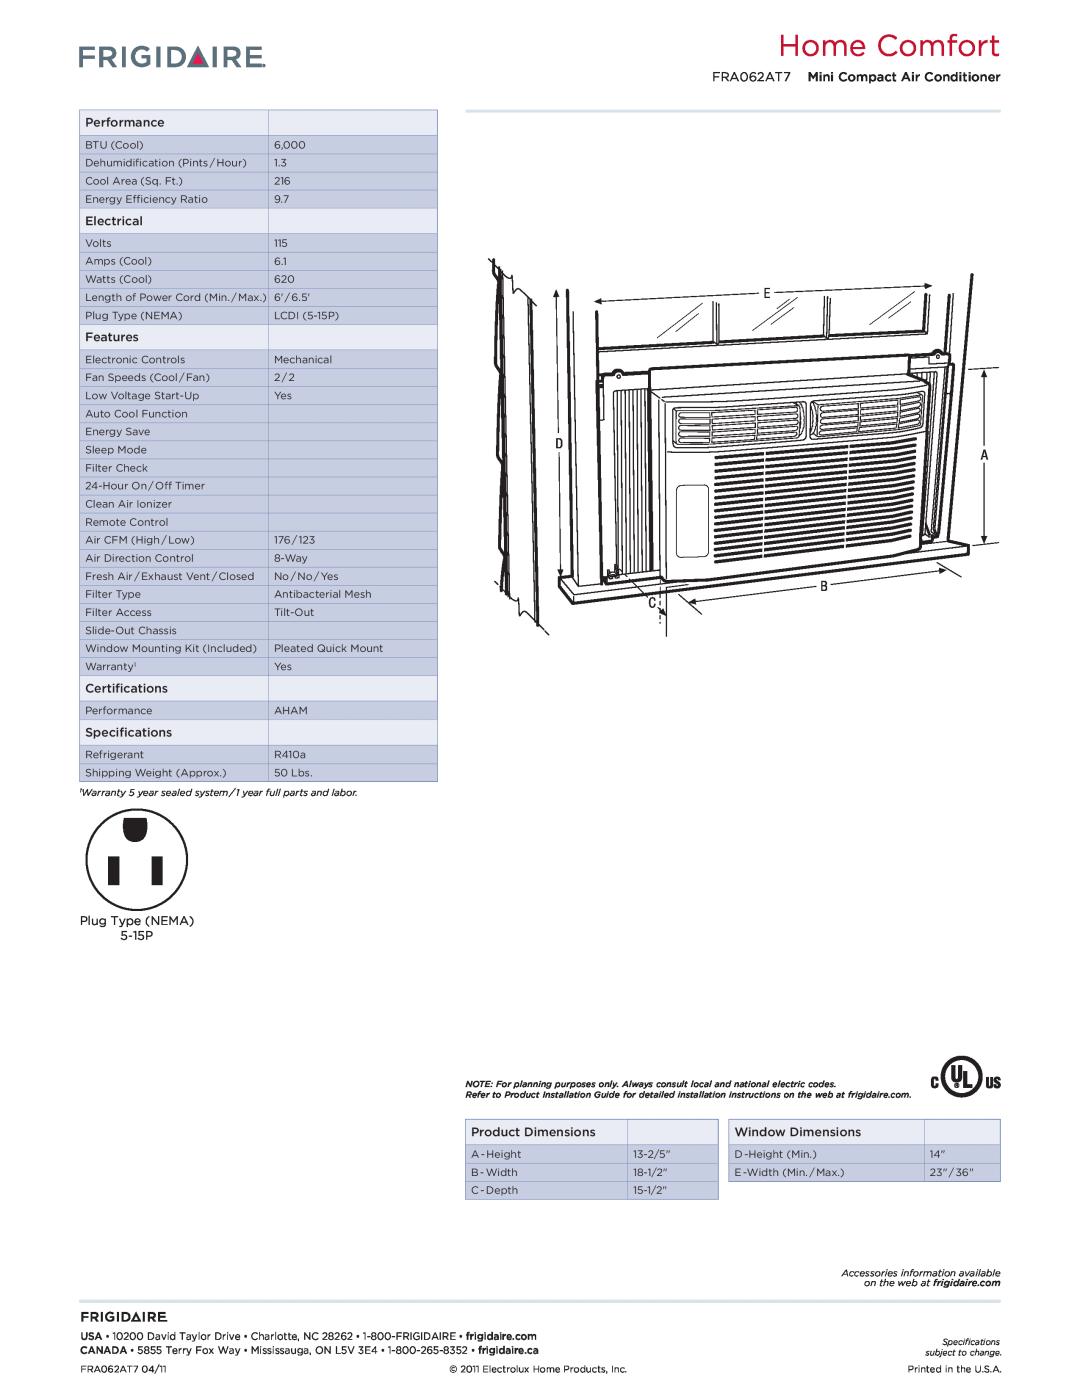 Frigidaire dimensions Home Comfort, E D A B C, FRA062AT7 Mini Compact Air Conditioner 